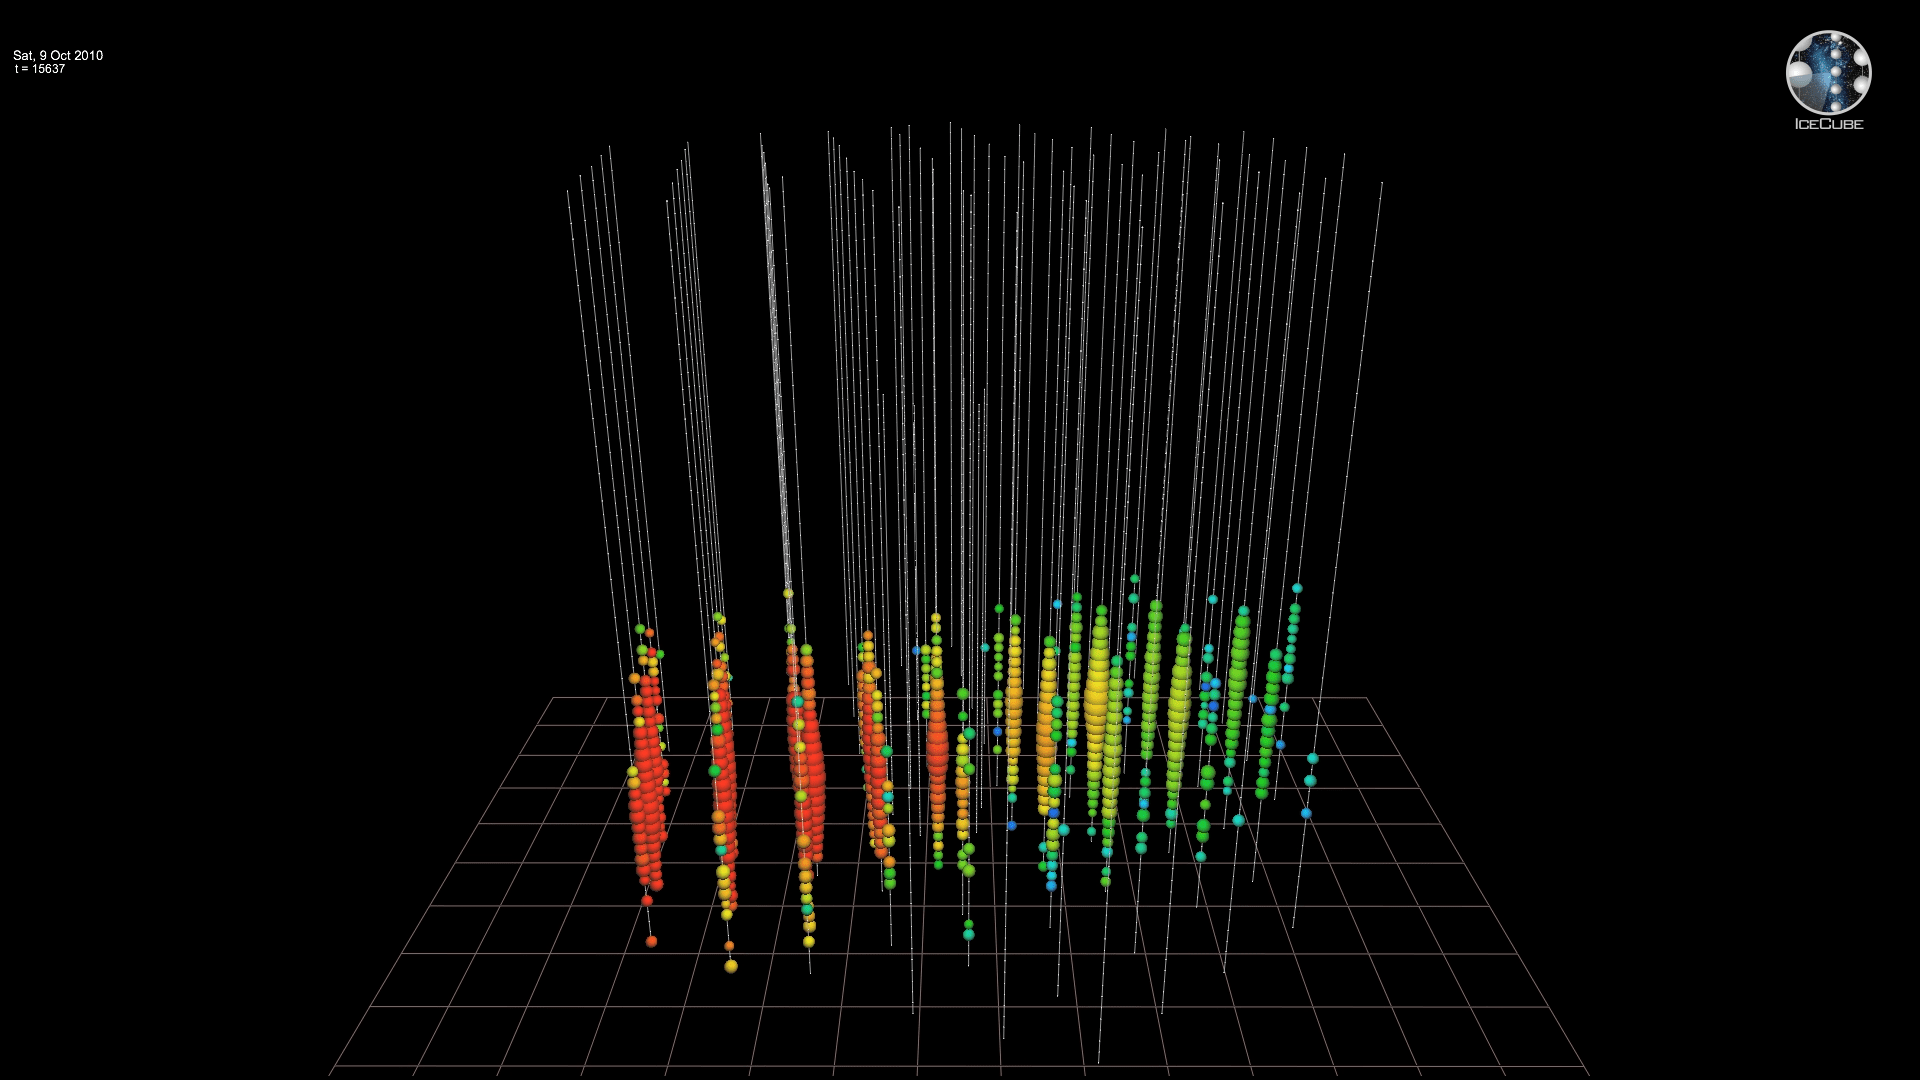 Video, IceCube Event ID 116701,6581938. Most probable neutrino energy: 466 TeV, October 9, 2010